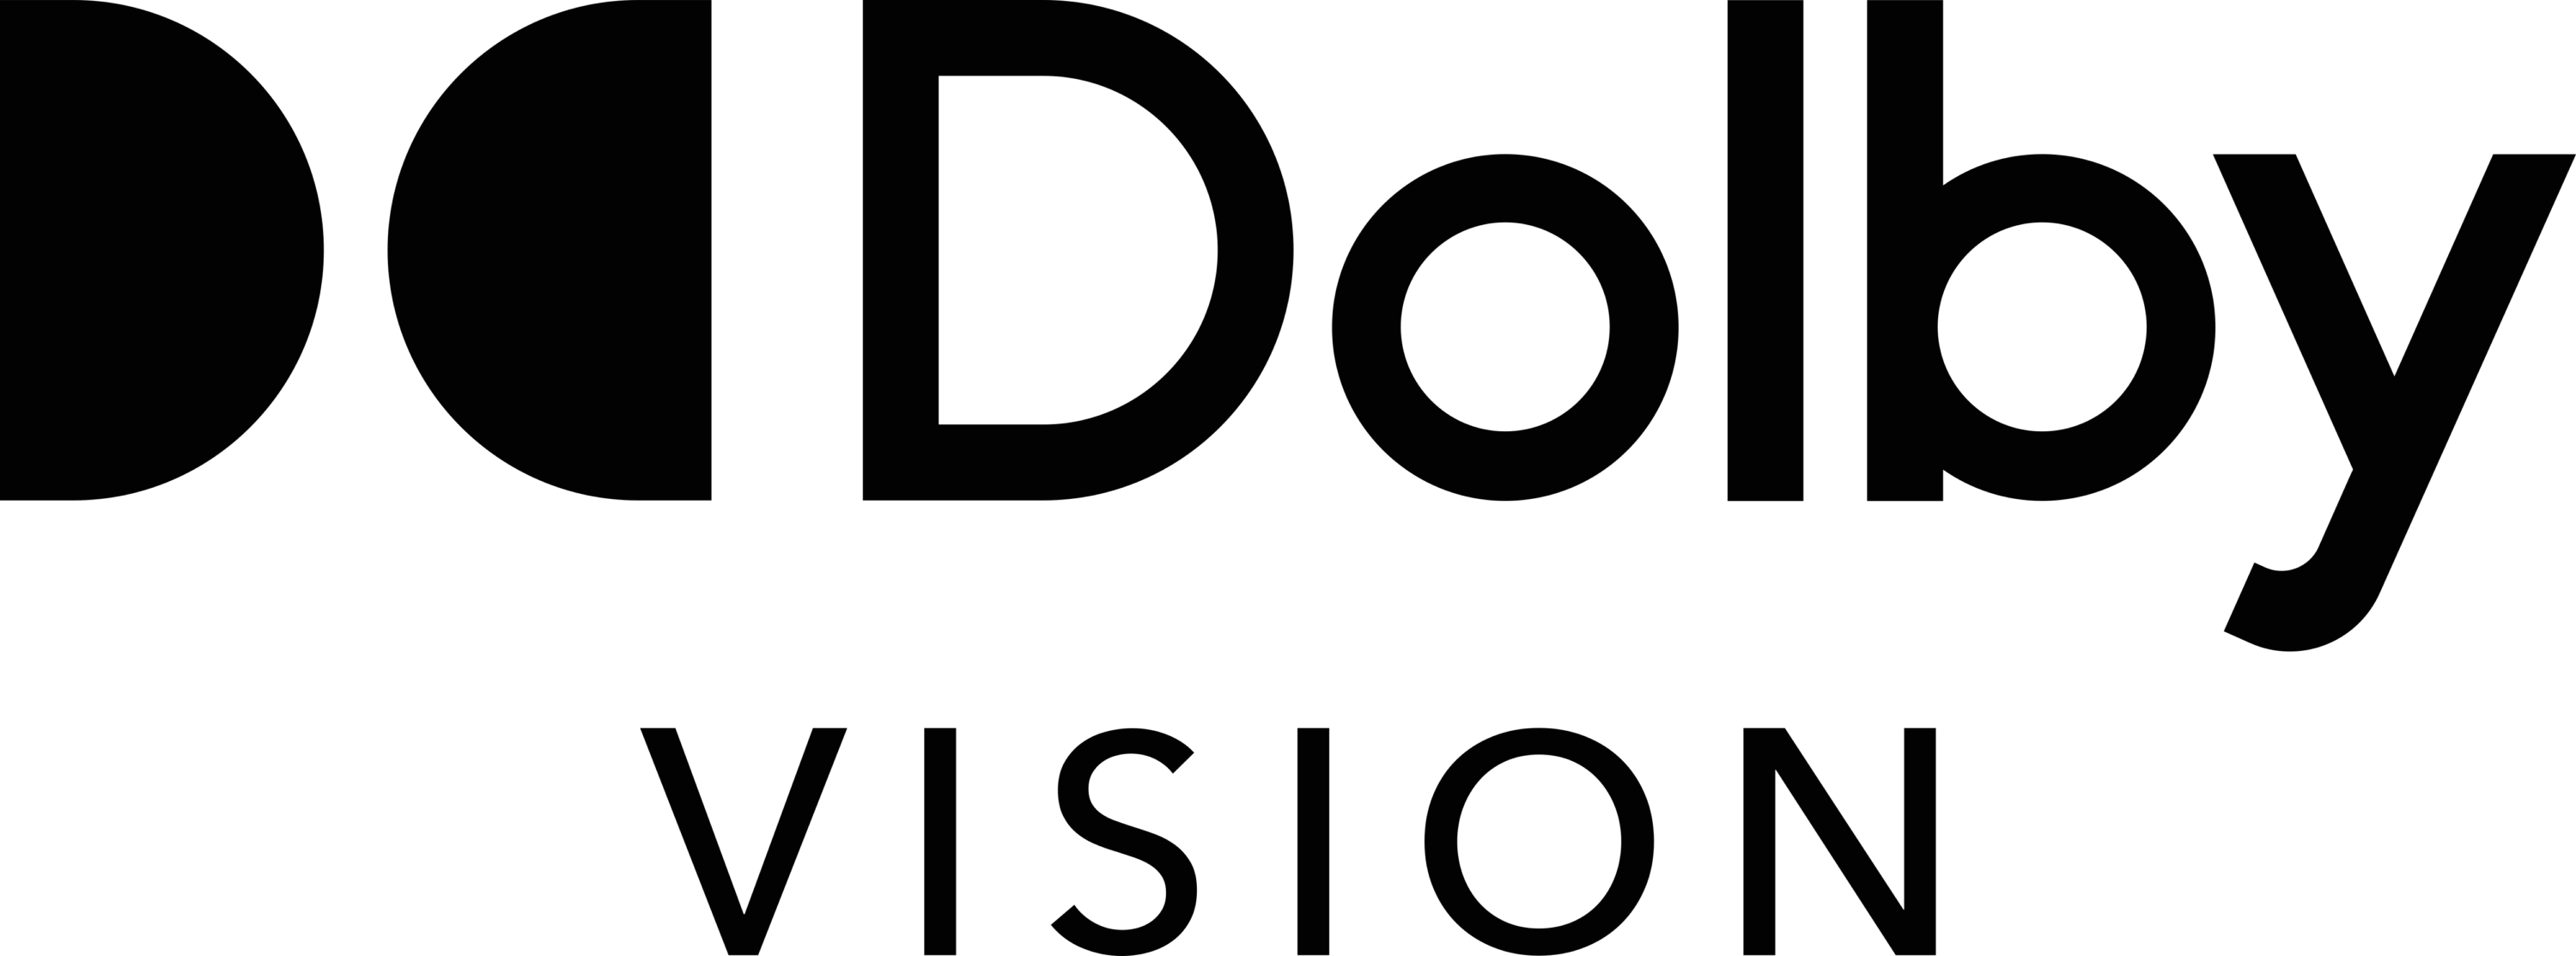 Dolby Vision Logo 2019 alternate version